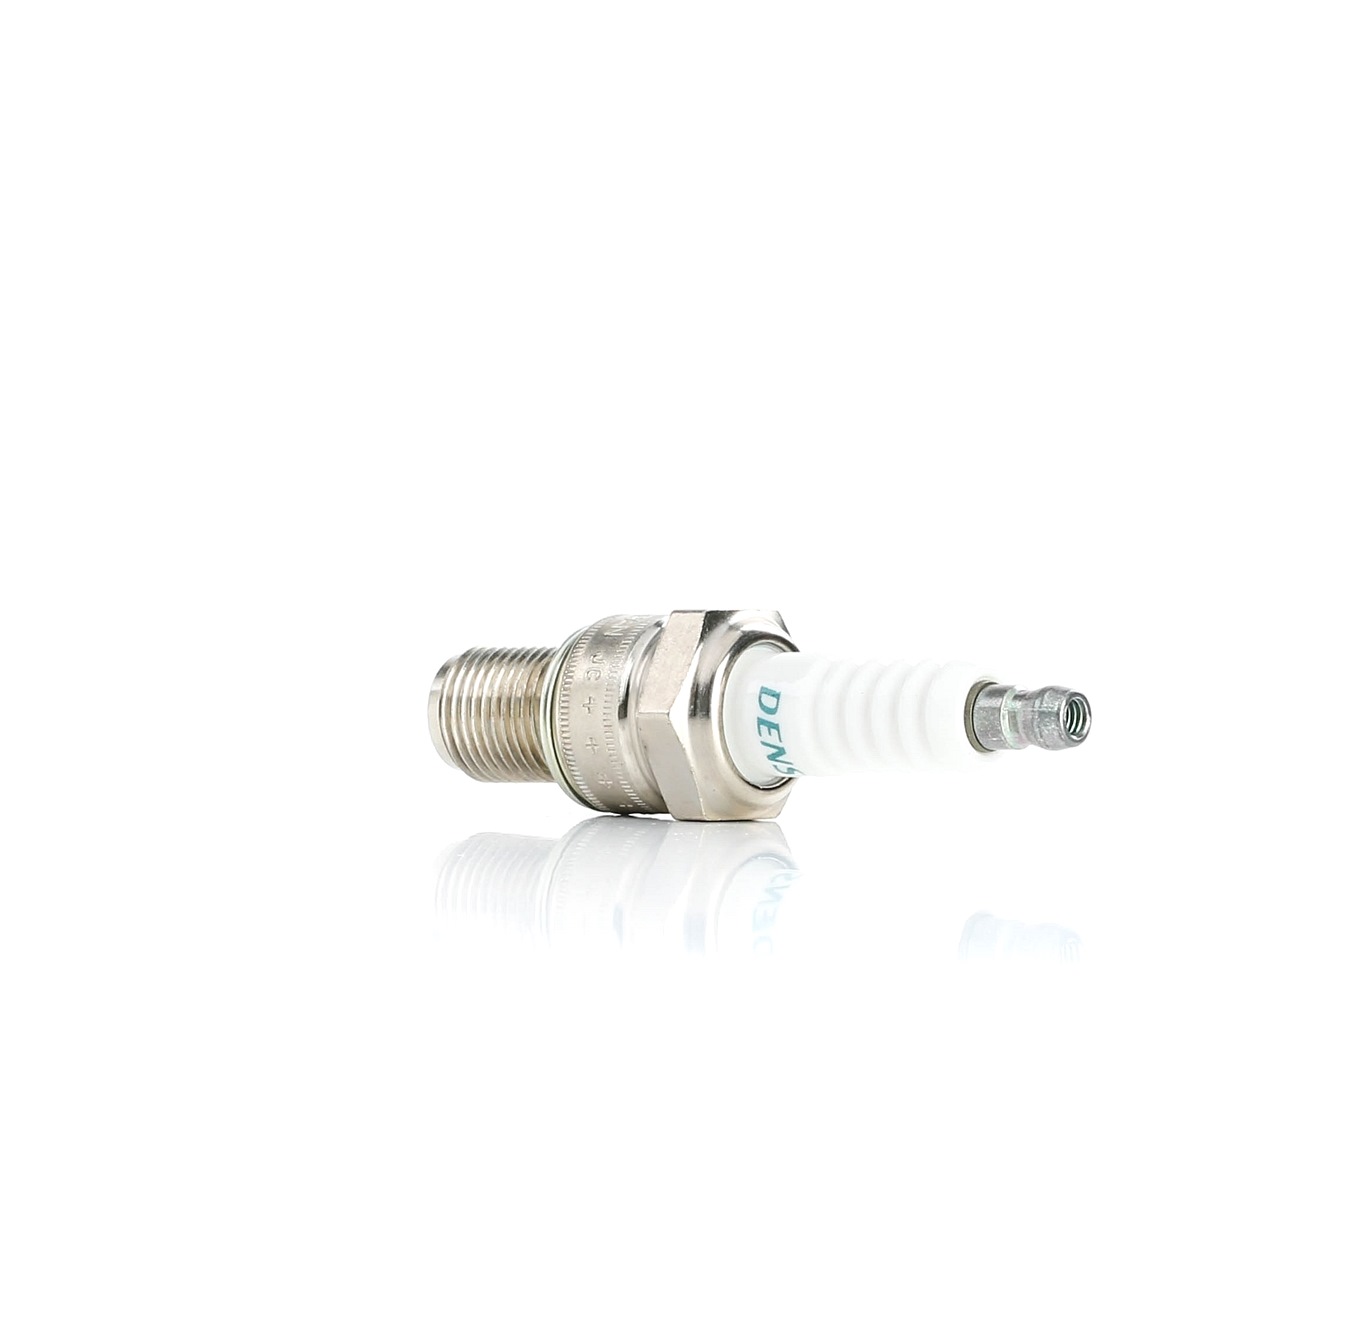 Buy Spark Plug DENSO IW27 - PORSCHE Engine parts online